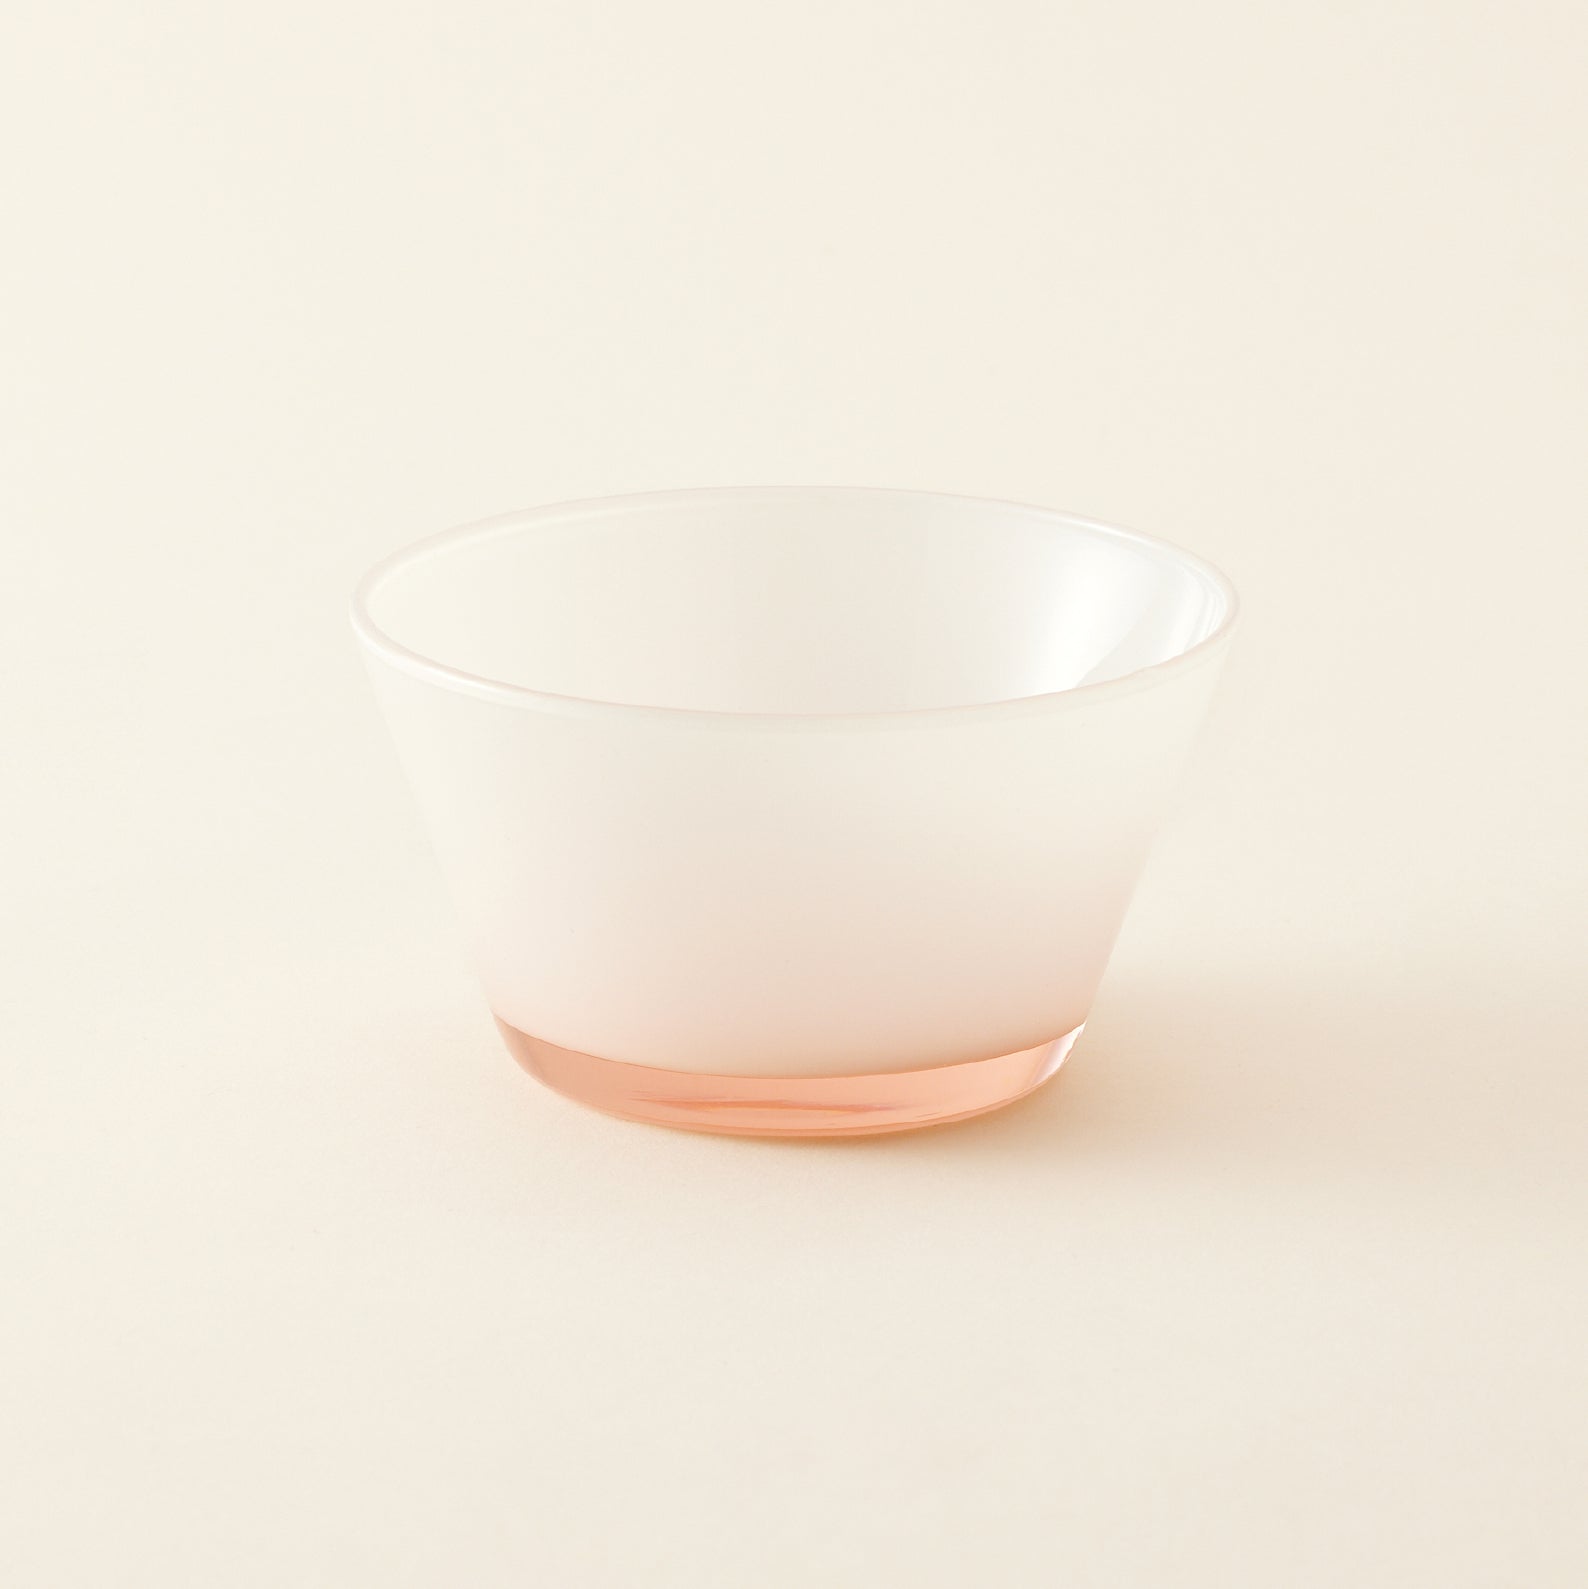 Eastern Glass Bowl | ถ้วย